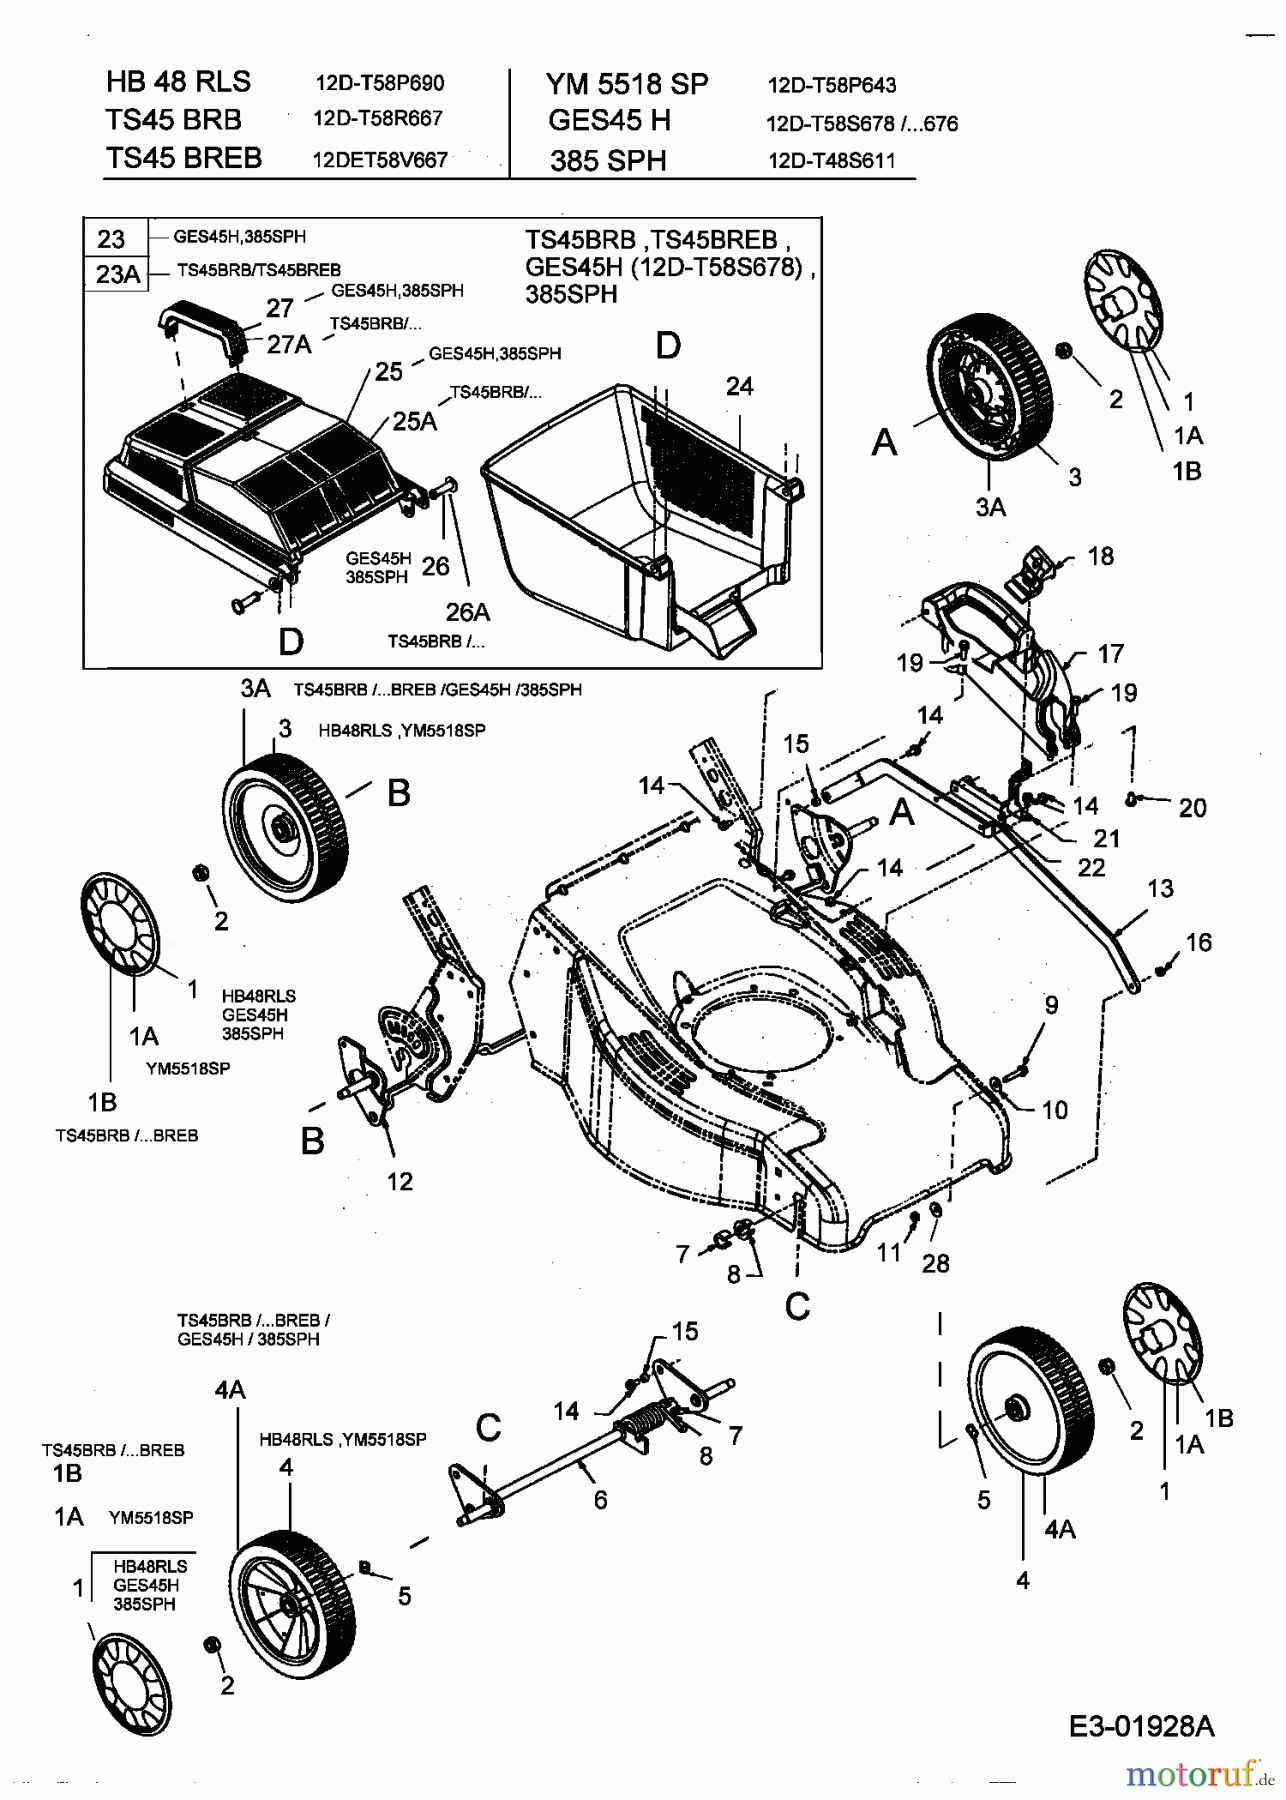  MTD Petrol mower self propelled GES 45 H 12D-T58S676  (2004) Grass box, Wheels, Cutting hight adjustment